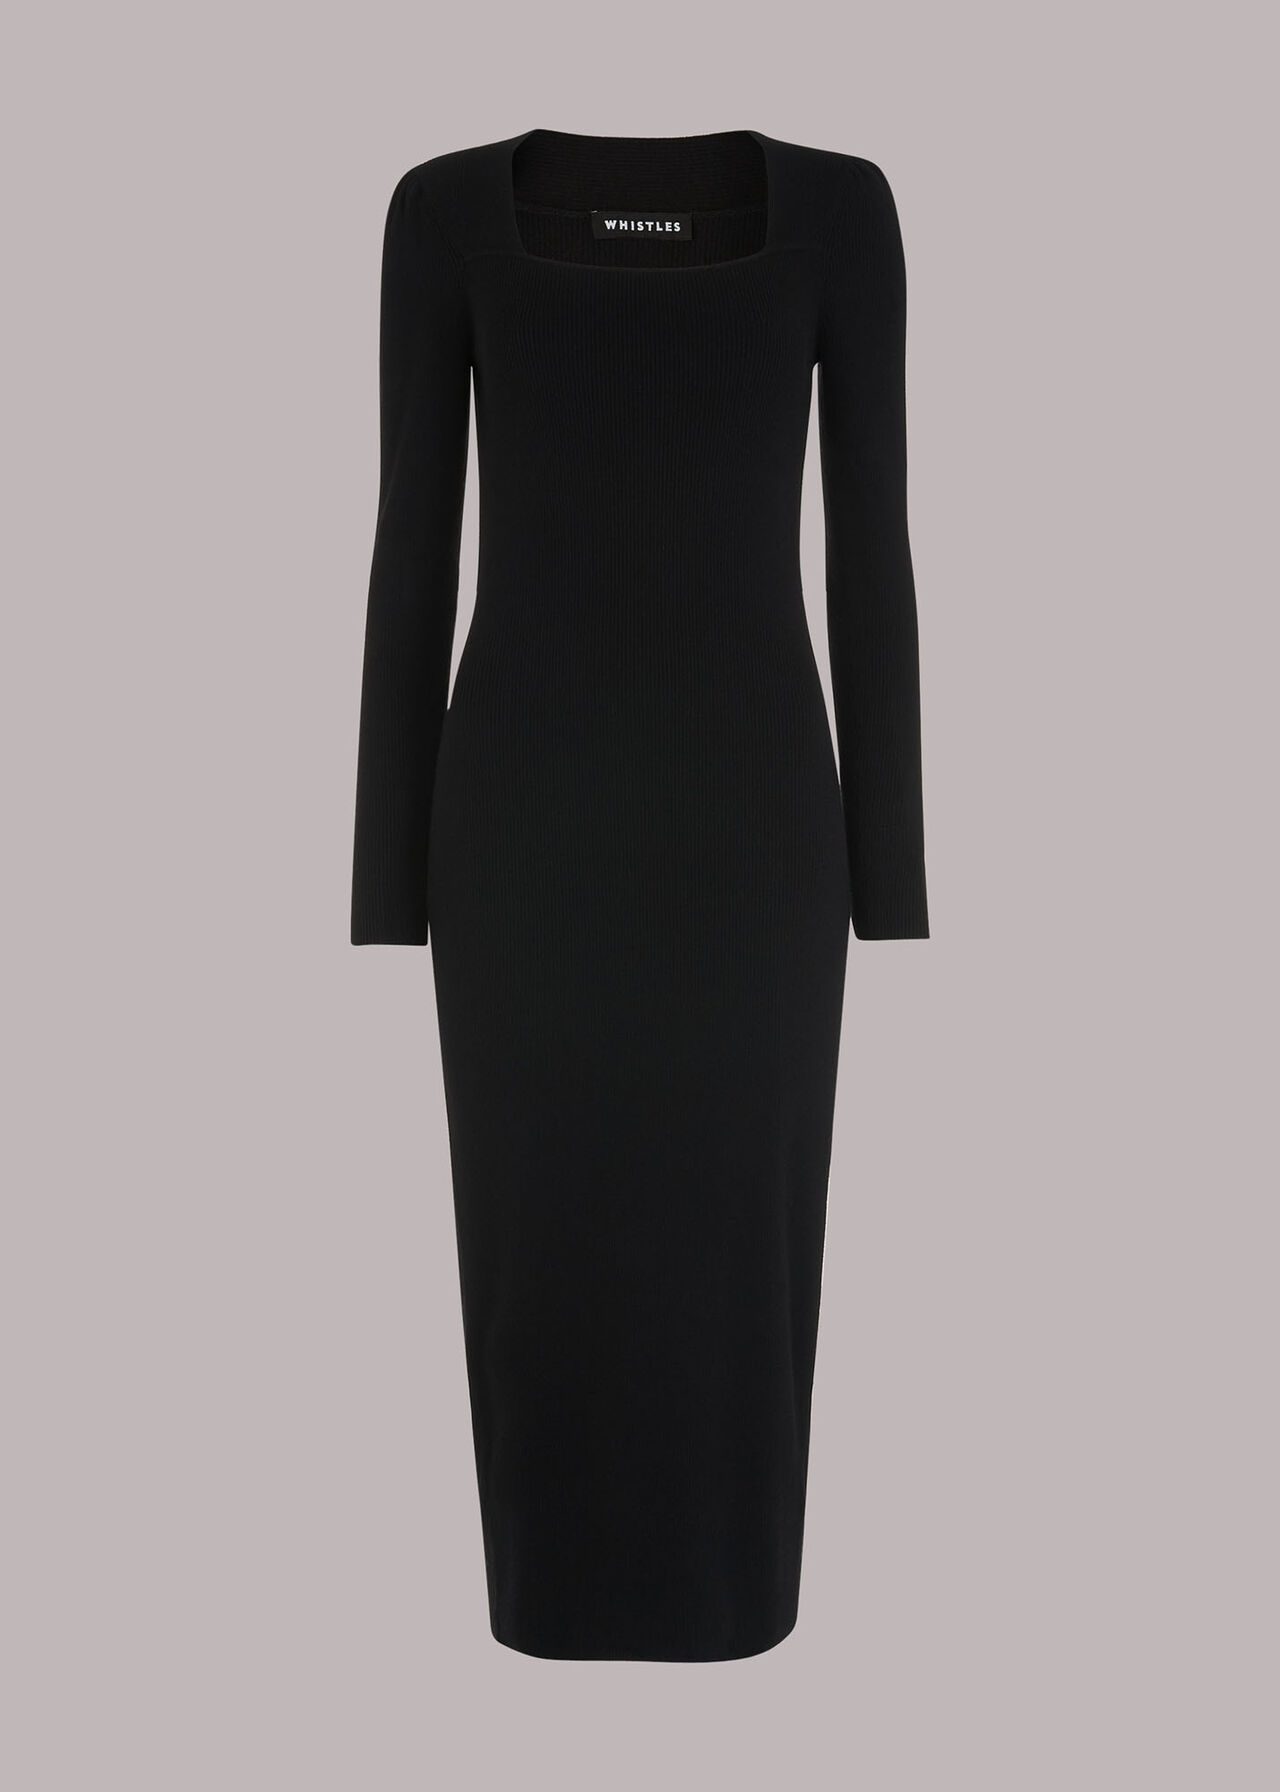 Black Square Neck Knit Dress | WHISTLES